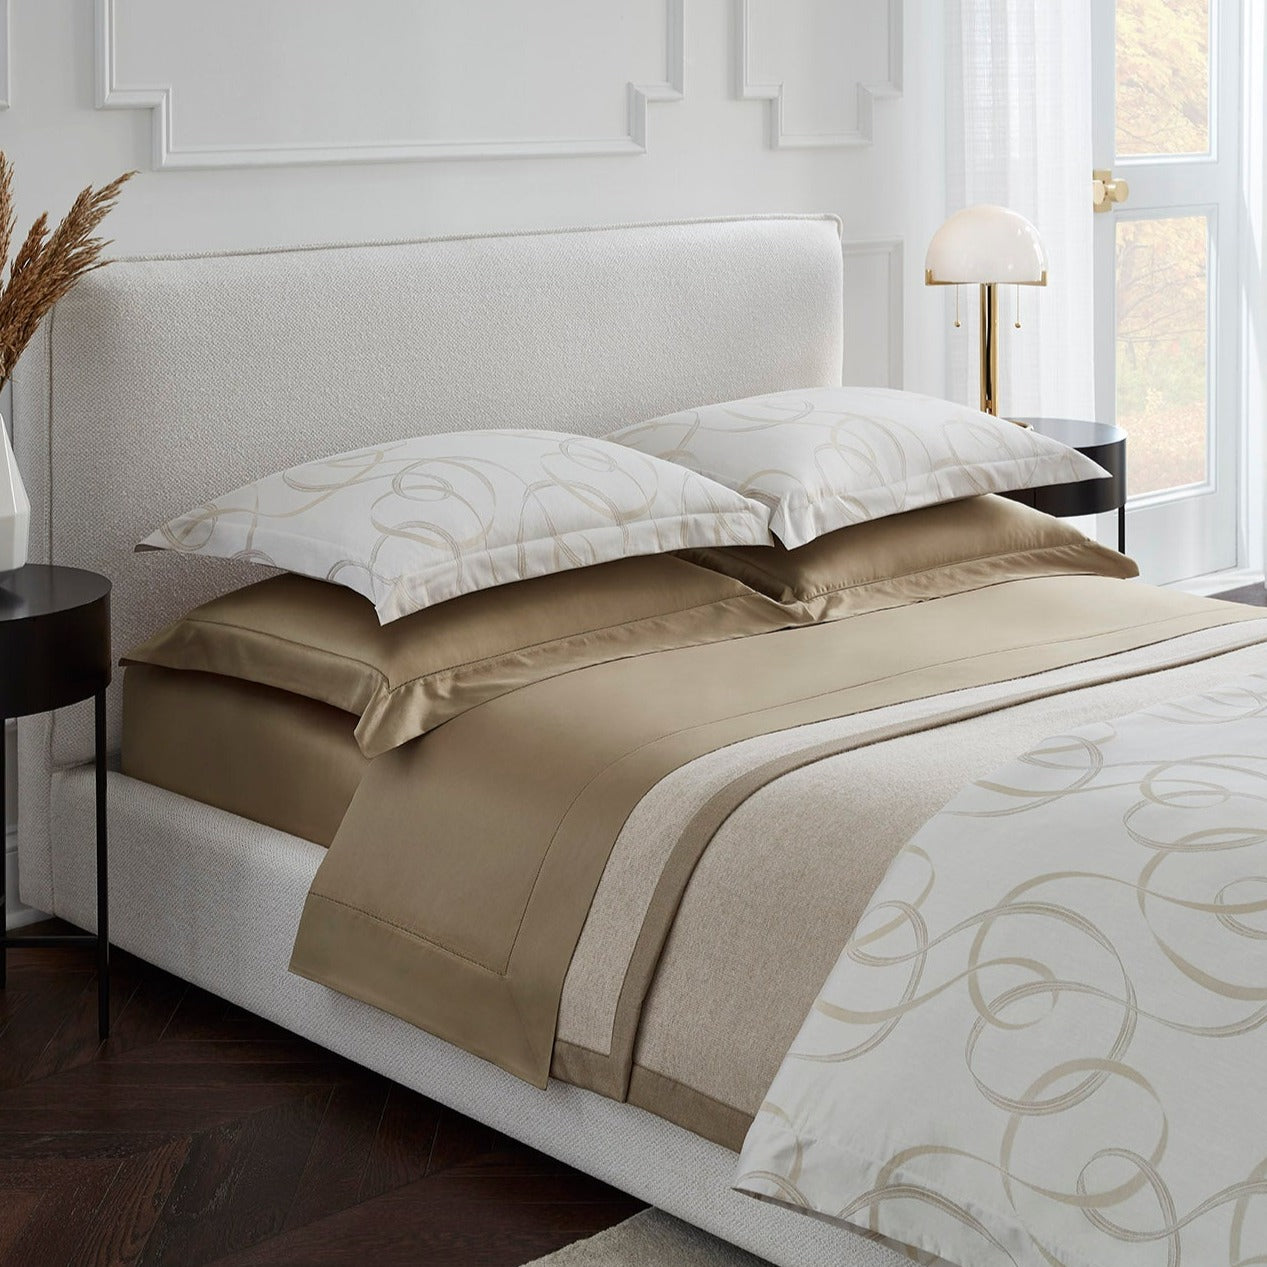 Caravino Bed Linens - 0